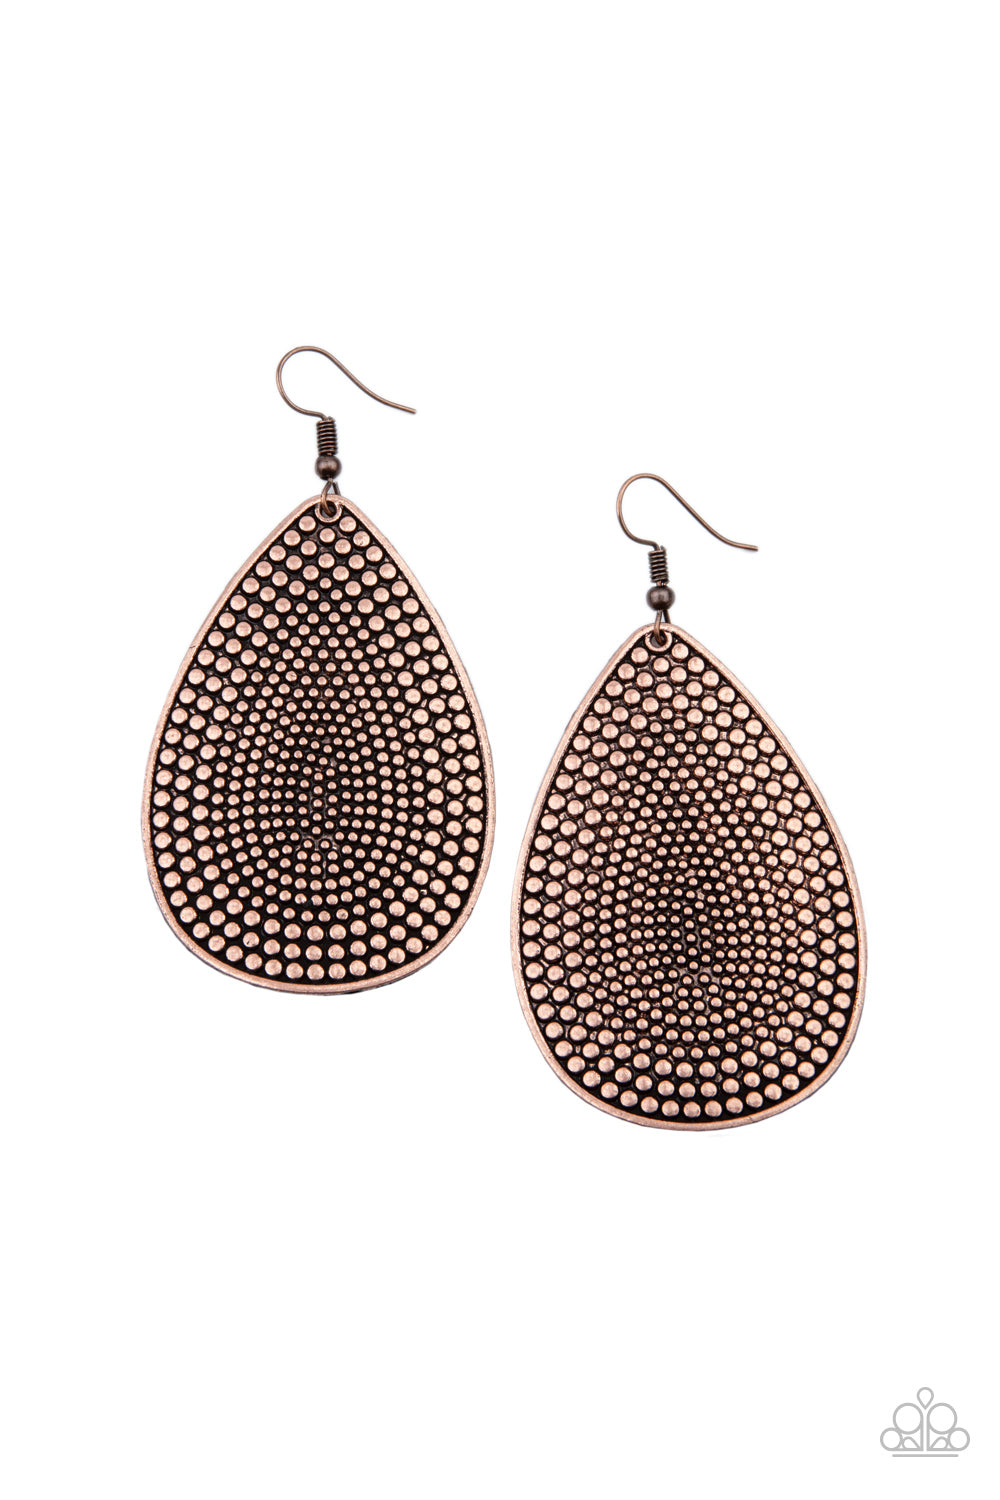 Artisan Adornment - Copper Earrings - Princess Glam Shop